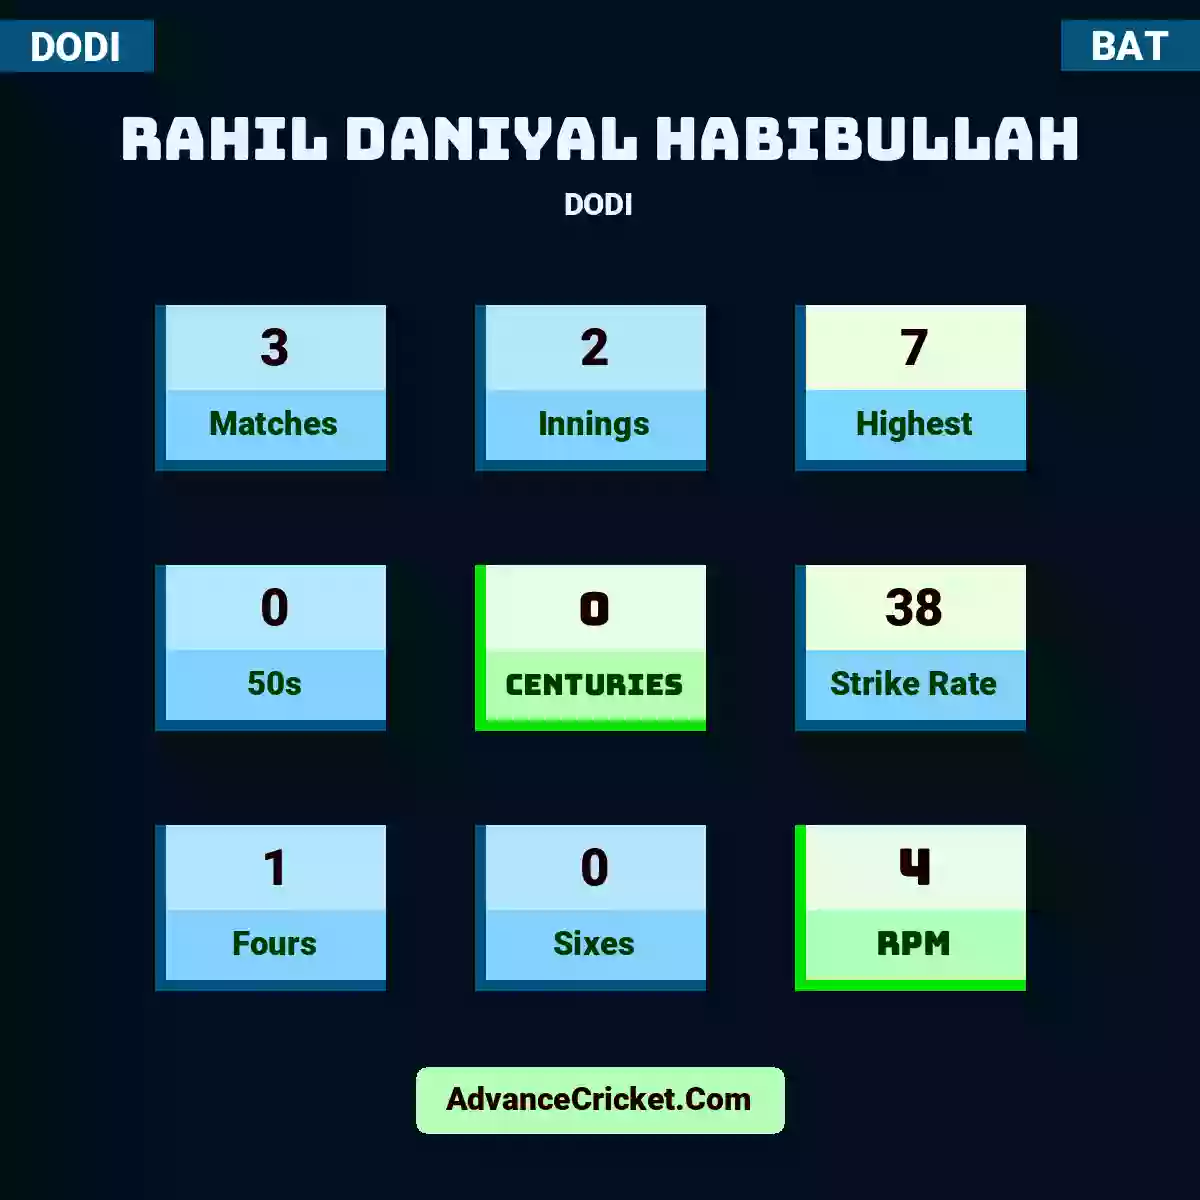 Rahil Daniyal Habibullah DODI , Rahil Daniyal Habibullah played 3 matches, scored 7 runs as highest, 0 half-centuries, and 0 centuries, with a strike rate of 38. R.Habibullah hit 1 fours and 0 sixes, with an RPM of 4.